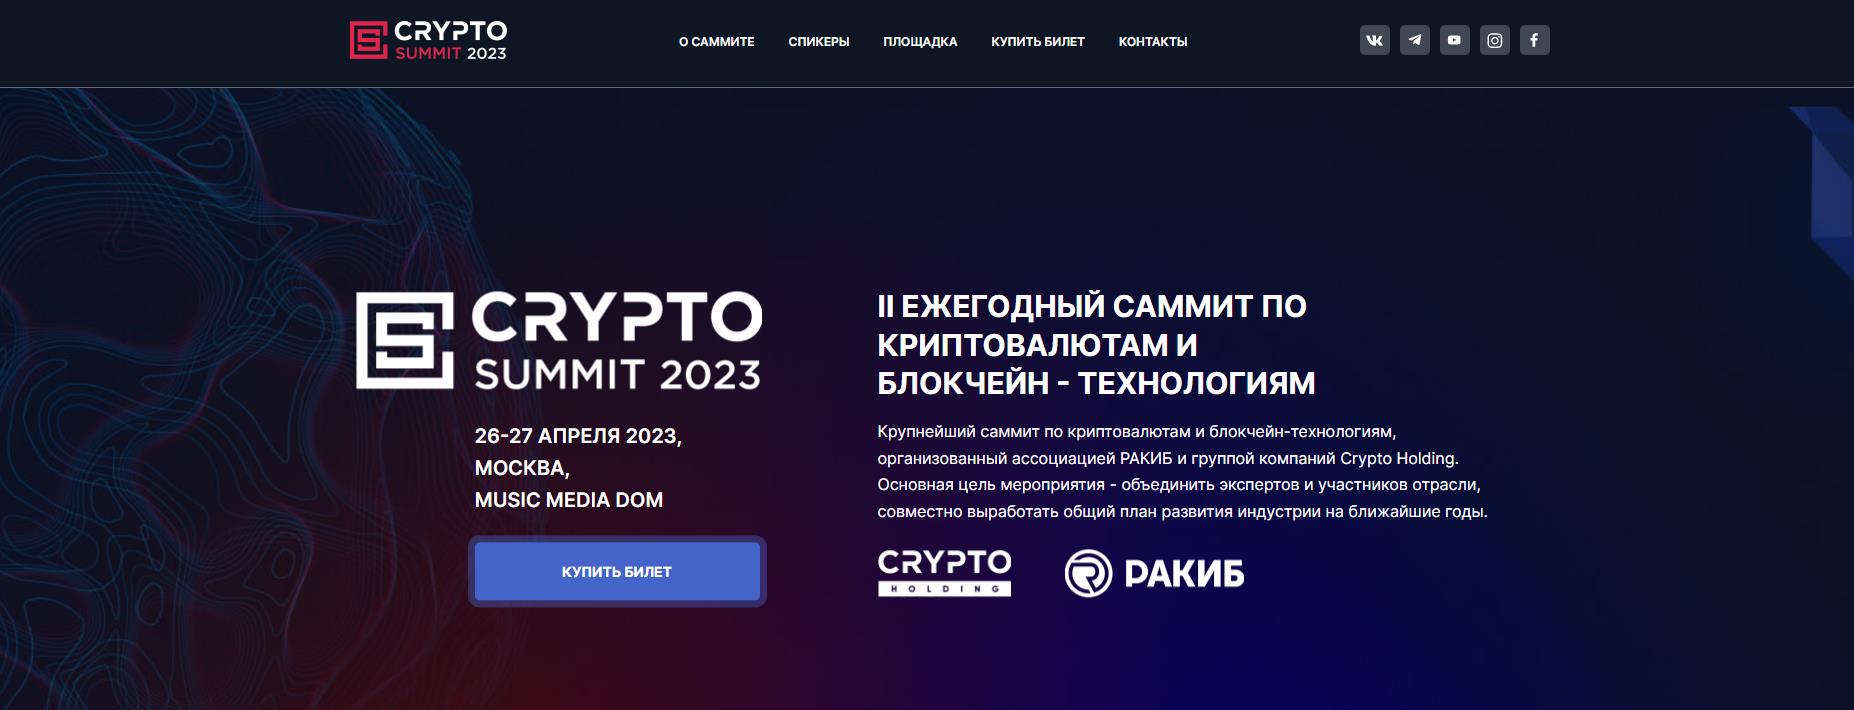 CRYPTO SUMMIT 2023/מוסקבה /26-27 באפריל, ביתן E1-4/HKCX-Miner